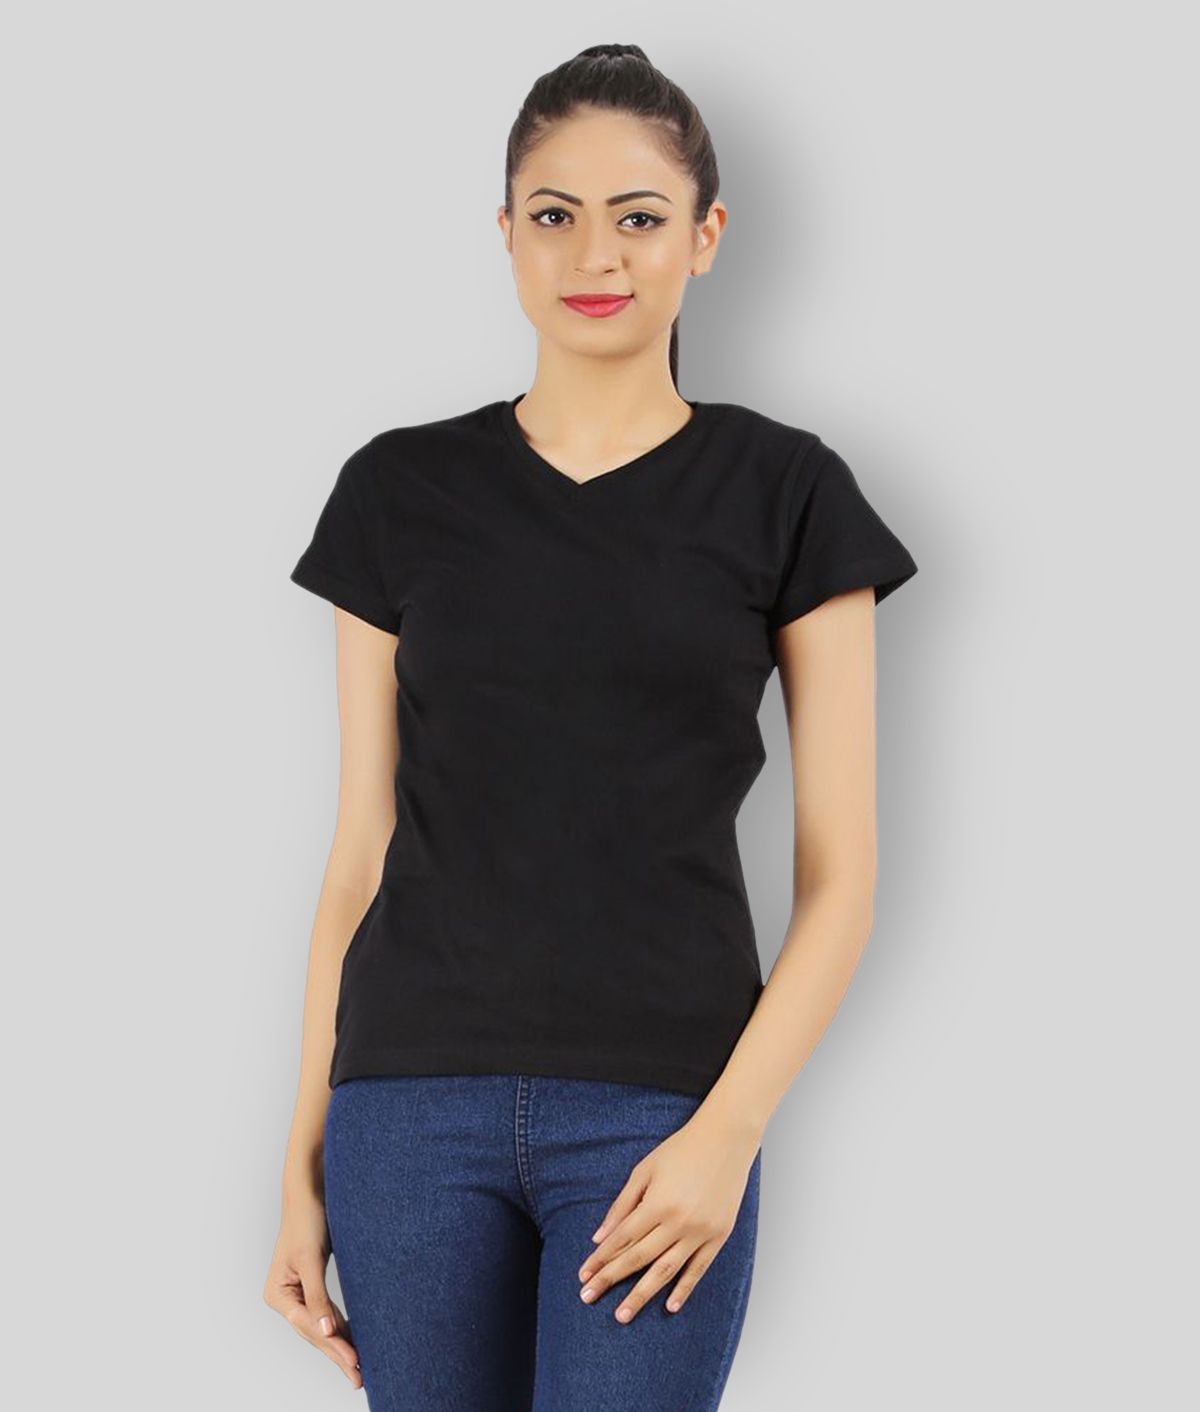 Ap'pulse - Black Cotton Regular Fit Women's T-Shirt ( Pack of 1 )